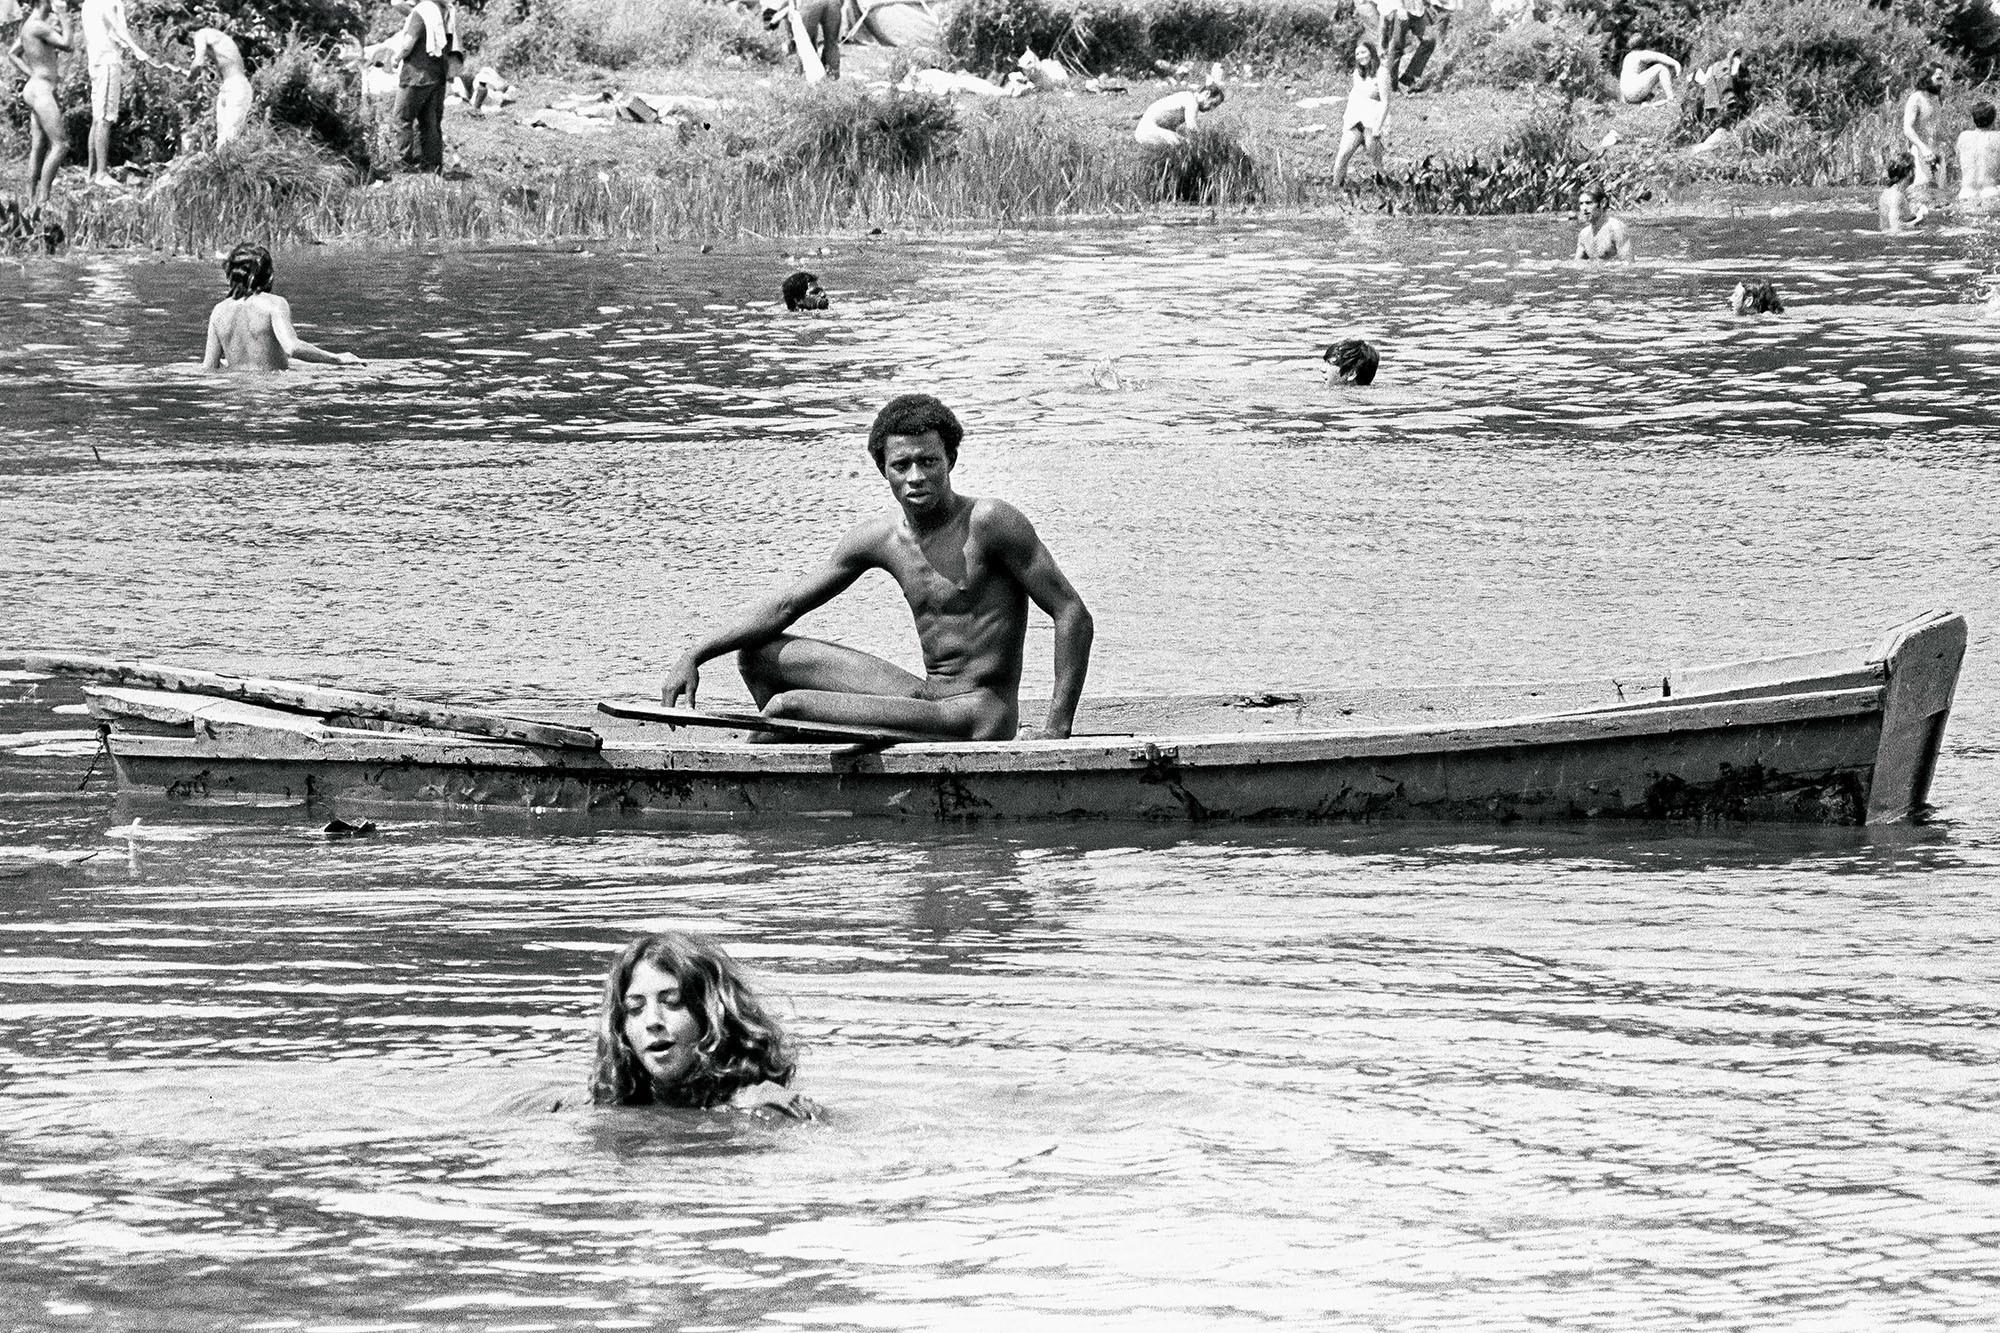 Baron Wolman Figurative Photograph - Woodstock 1969, Canoe Man